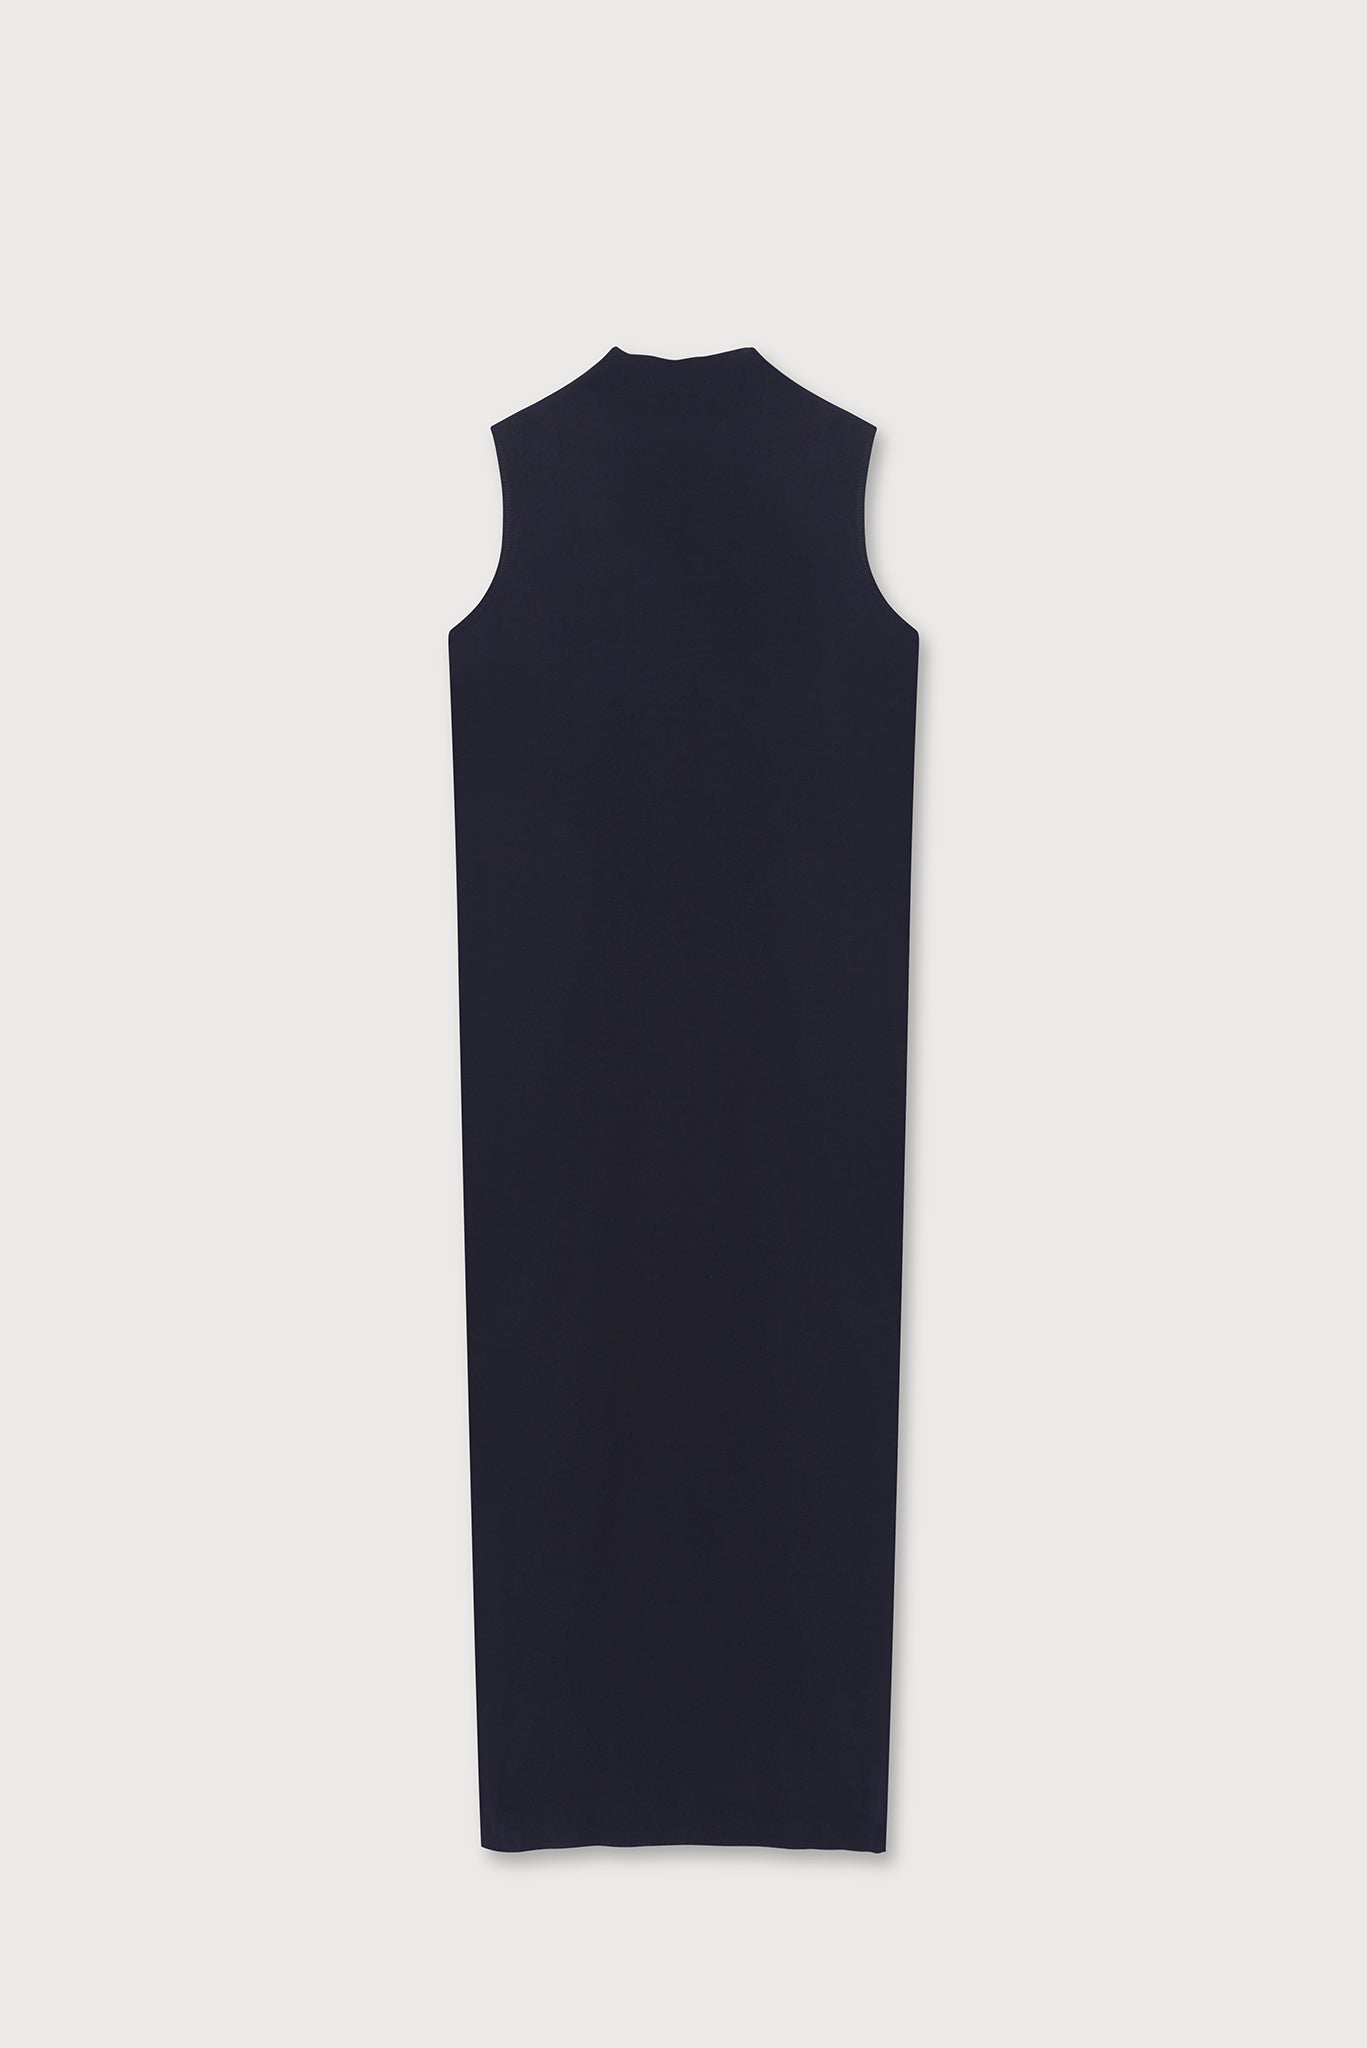 A.BCH A.14 Navy Marle Sleeveless Skivvy Dress in Organic Cotton Rib